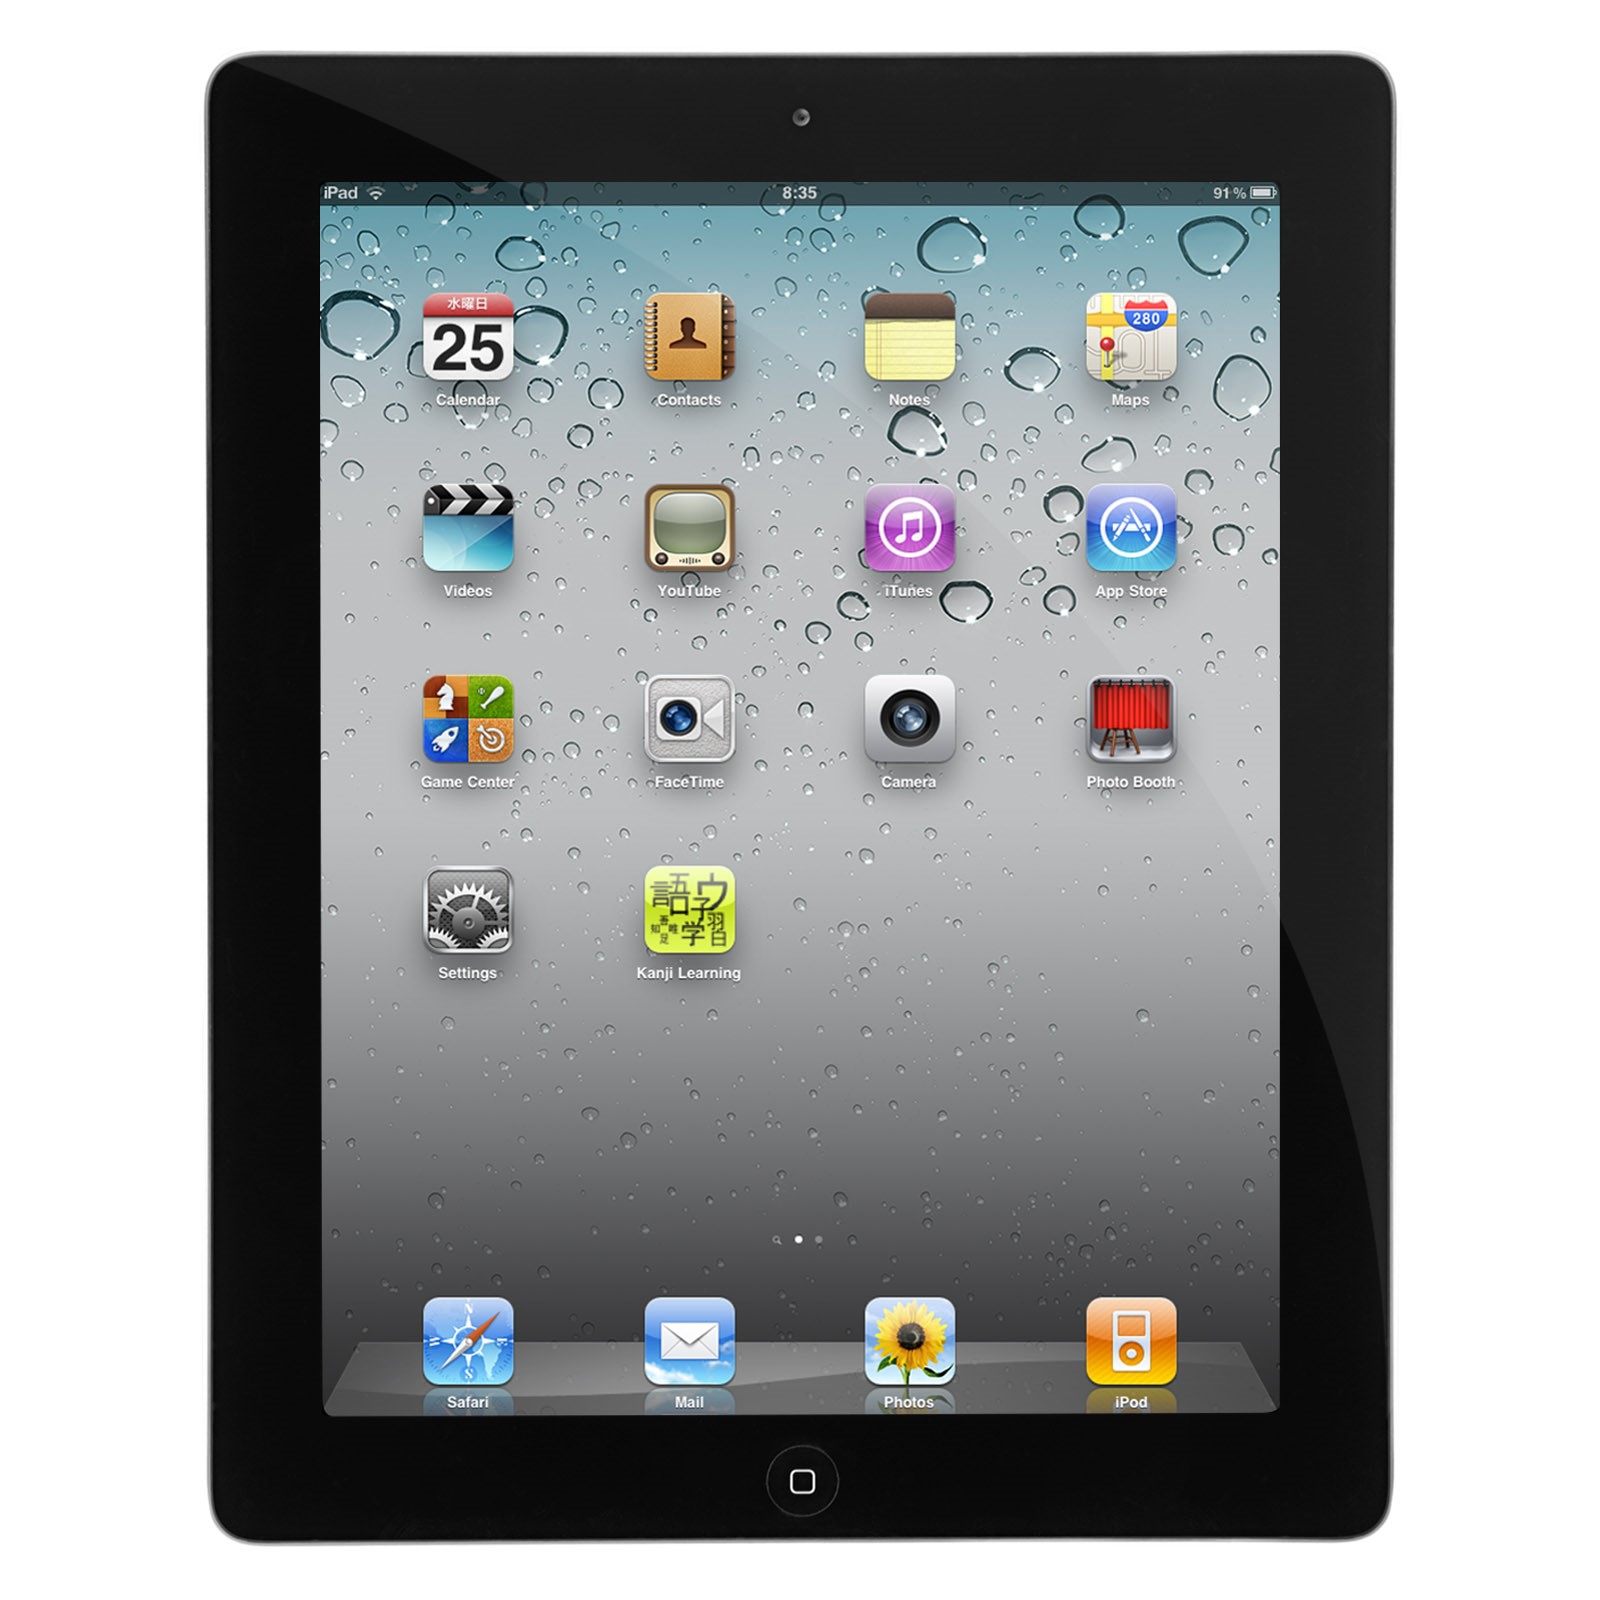 Restored Apple iPad 2 16GB 9.7" Touchscreen Wi-Fi Tablet - Black - MC769LLA (Refurbished) - image 1 of 2